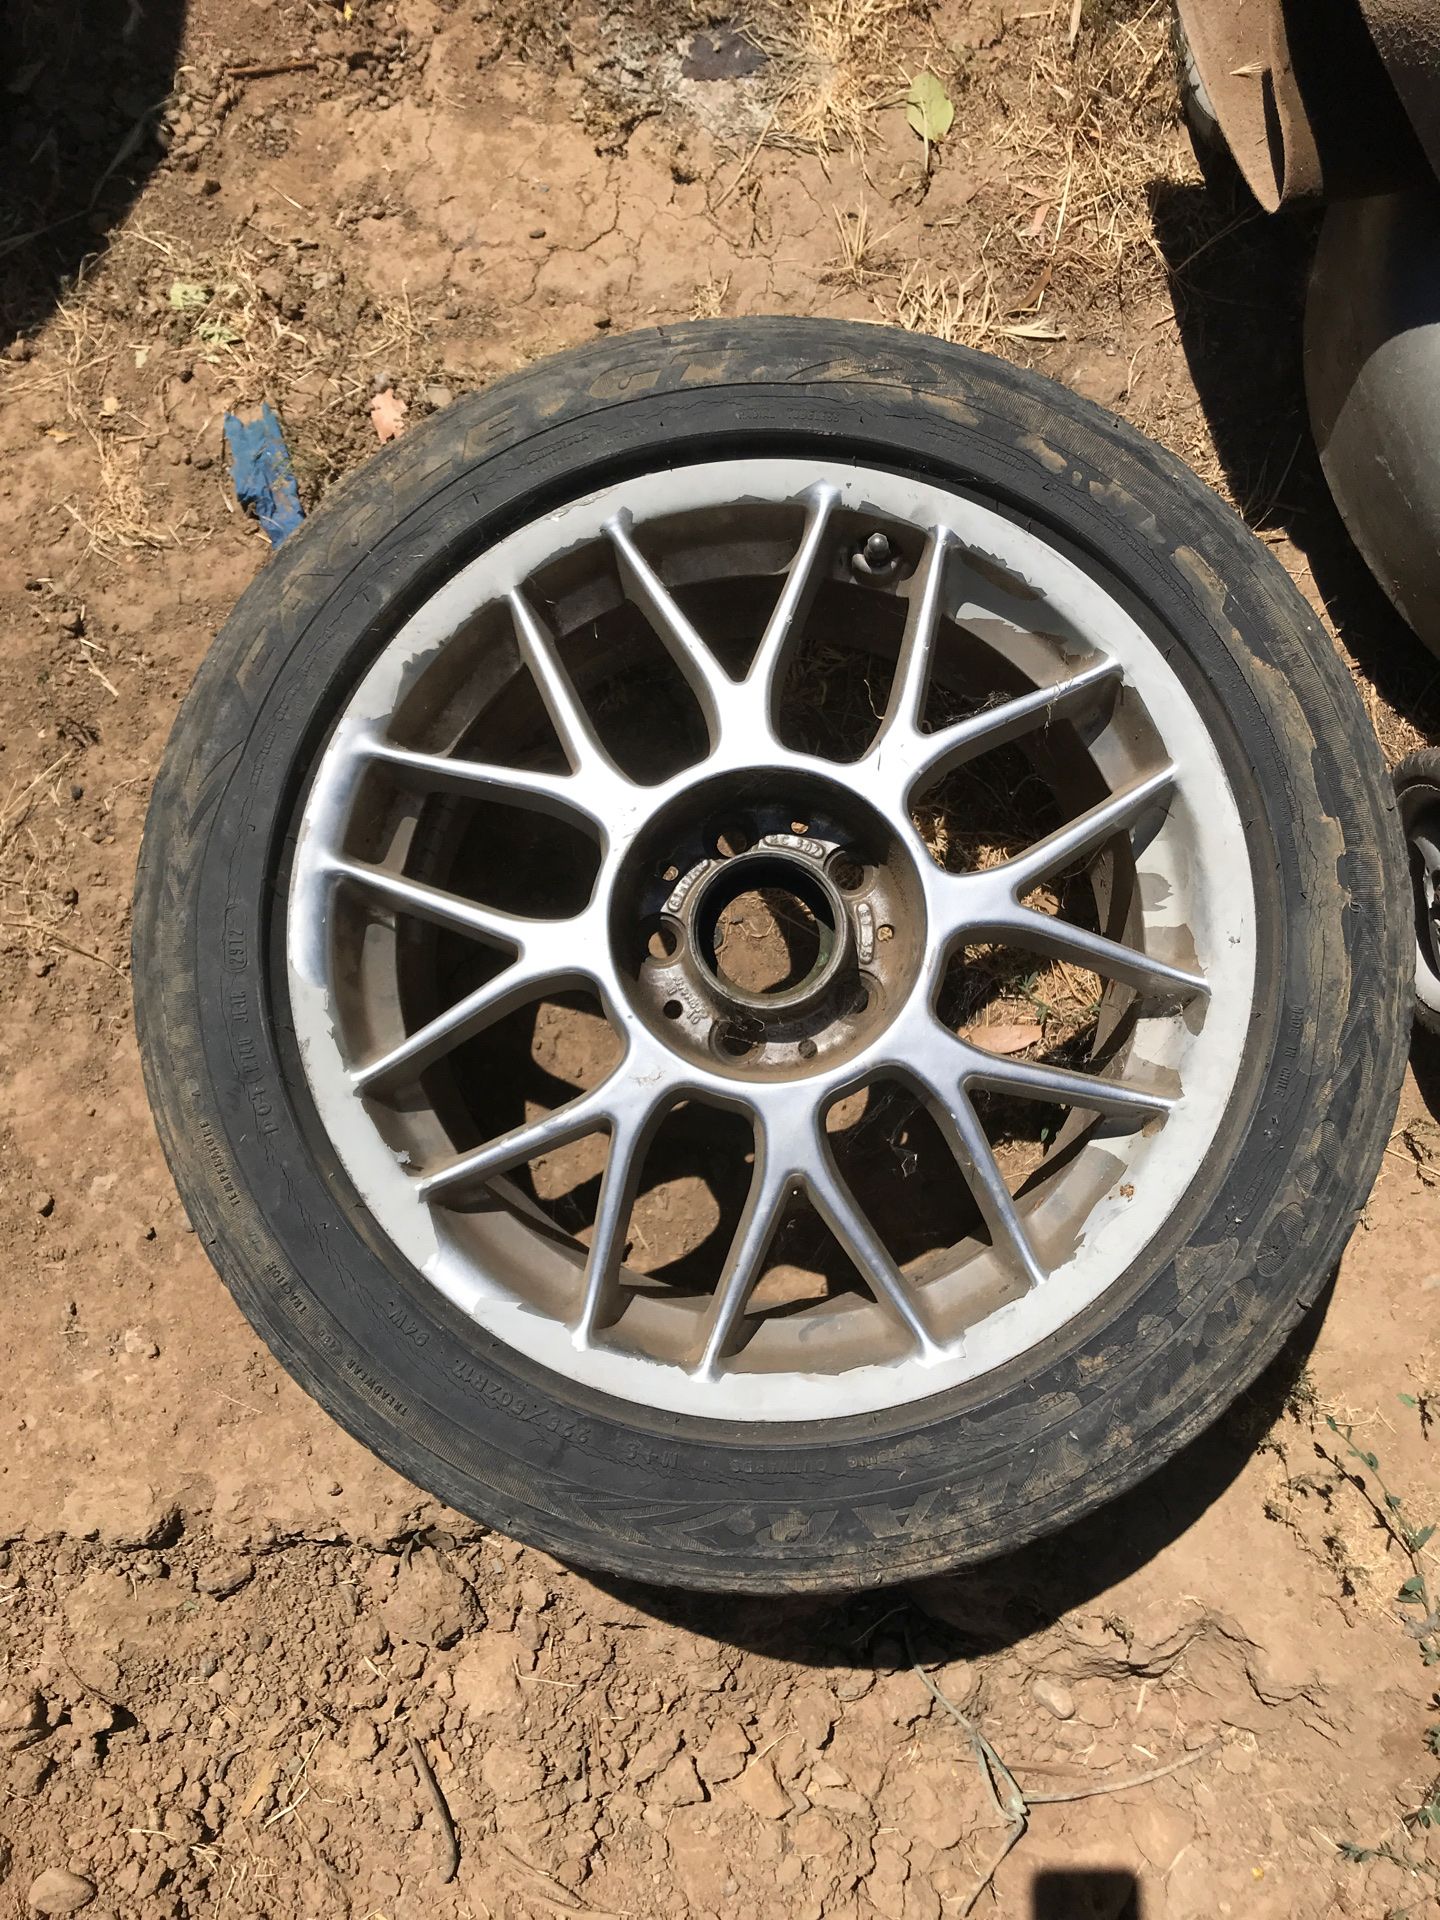 Audi Allroad OEM BBS wheels and tire 17”